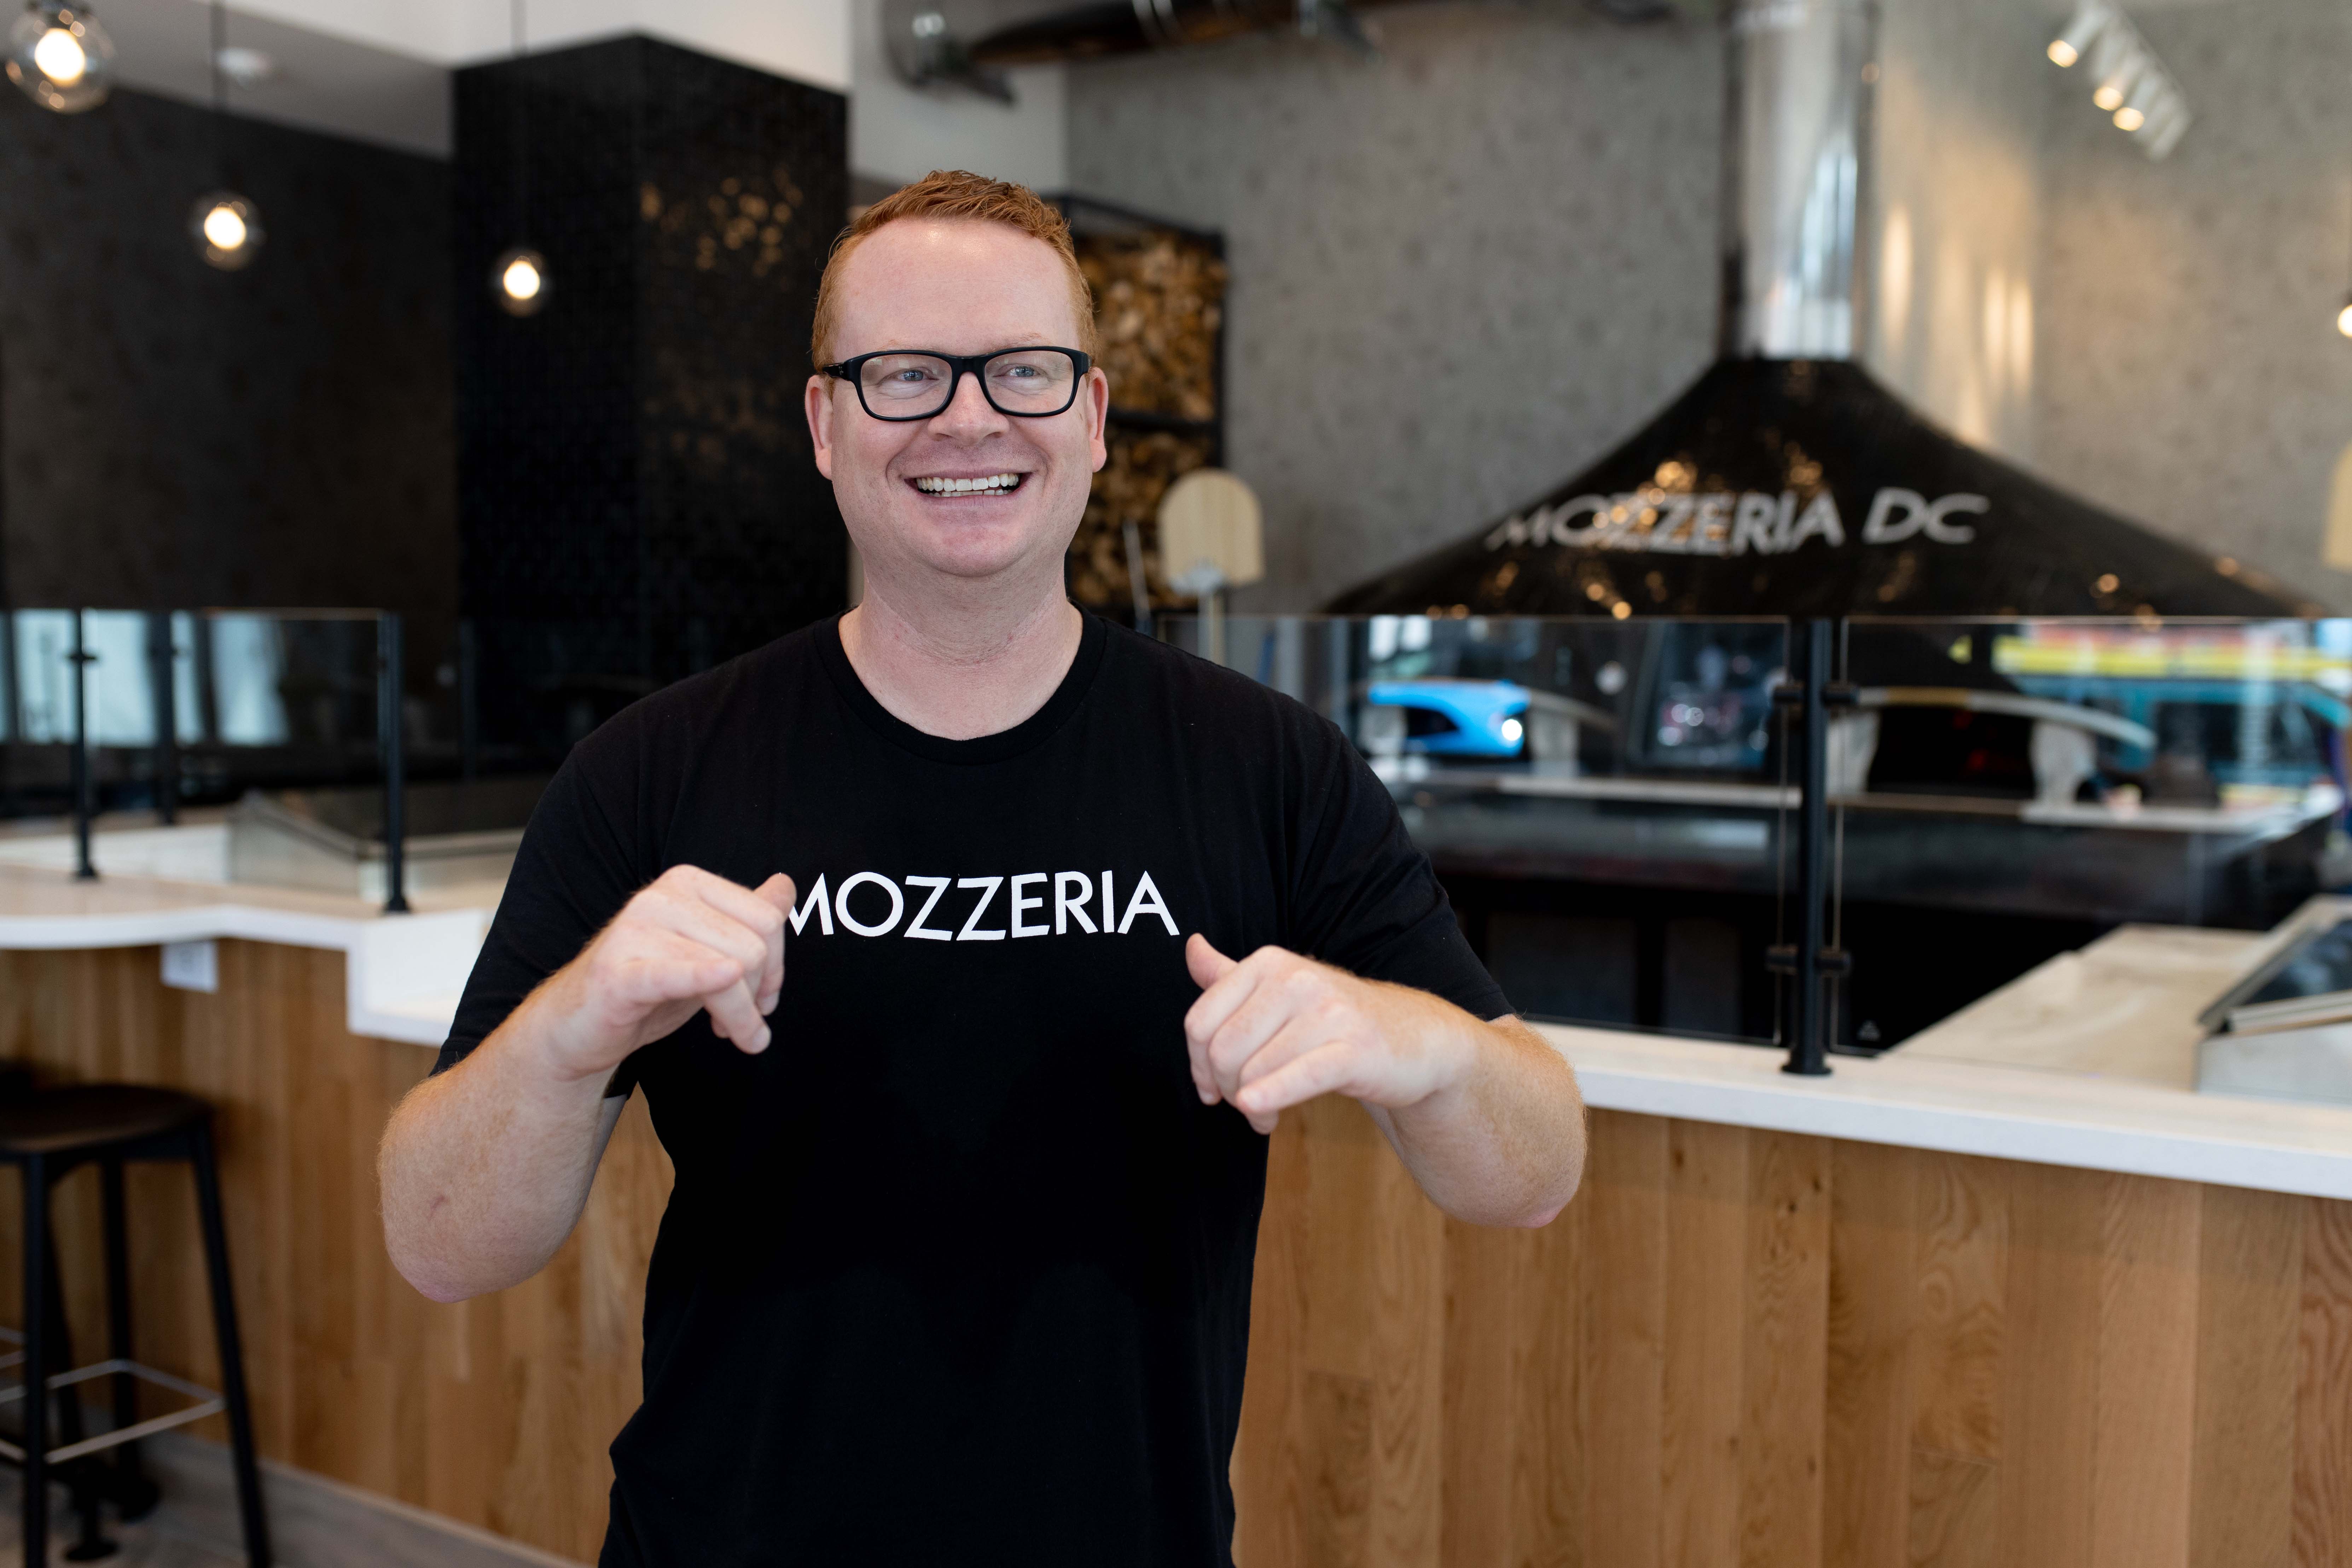 CEO Ryan Maliszewski displays Mozzeria's sign name, inspired by Italian Sign Language for "pizza"